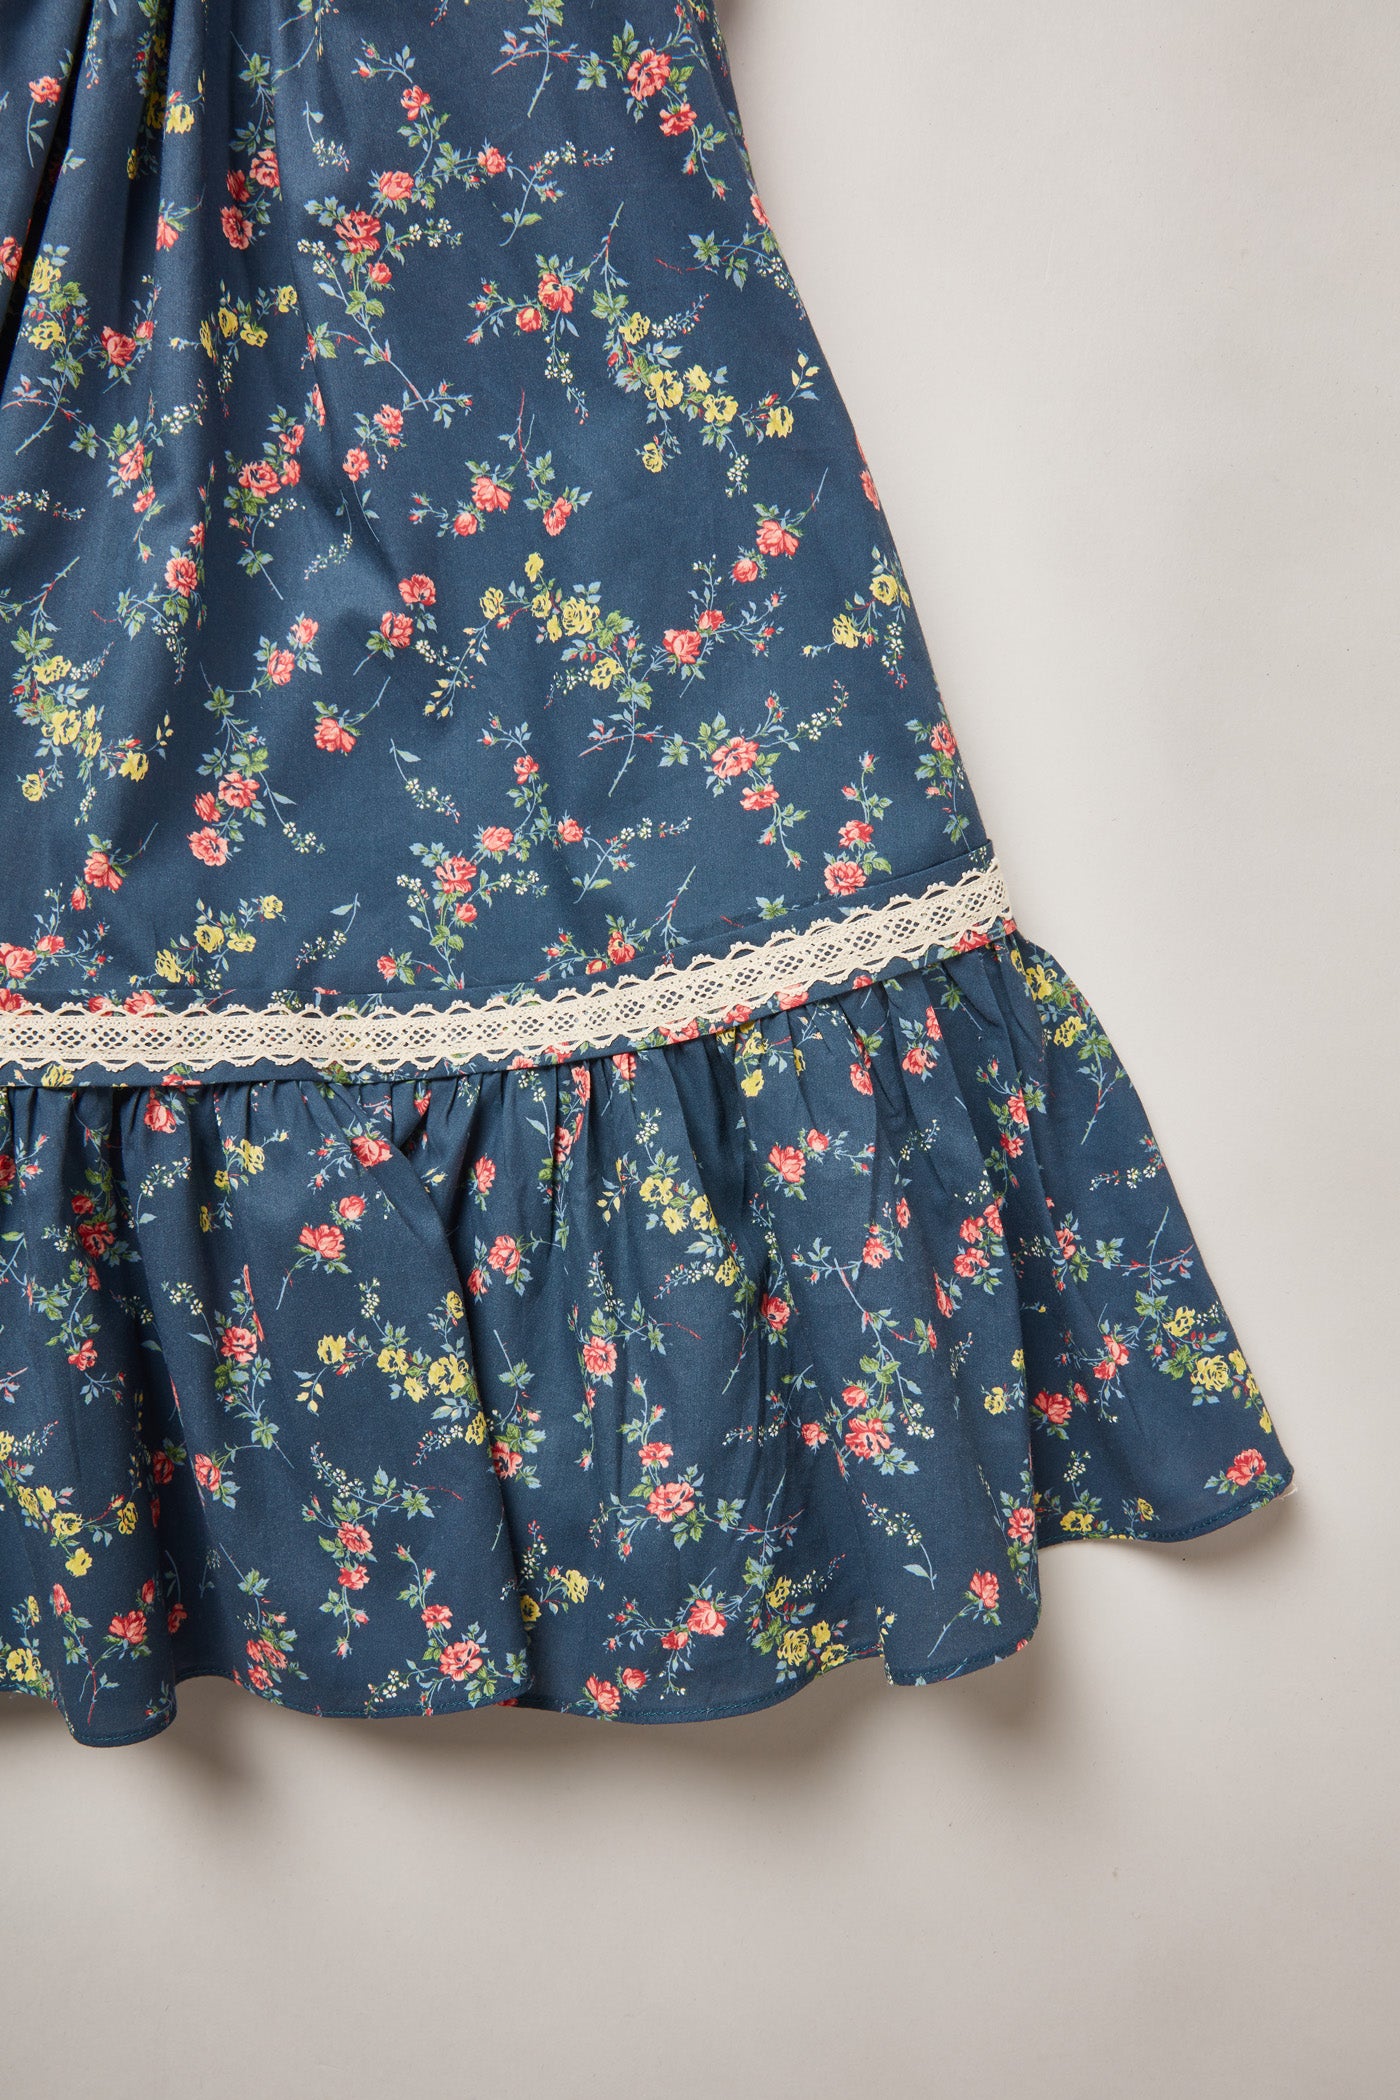 Plumcake Dress in Blue Rose Garden